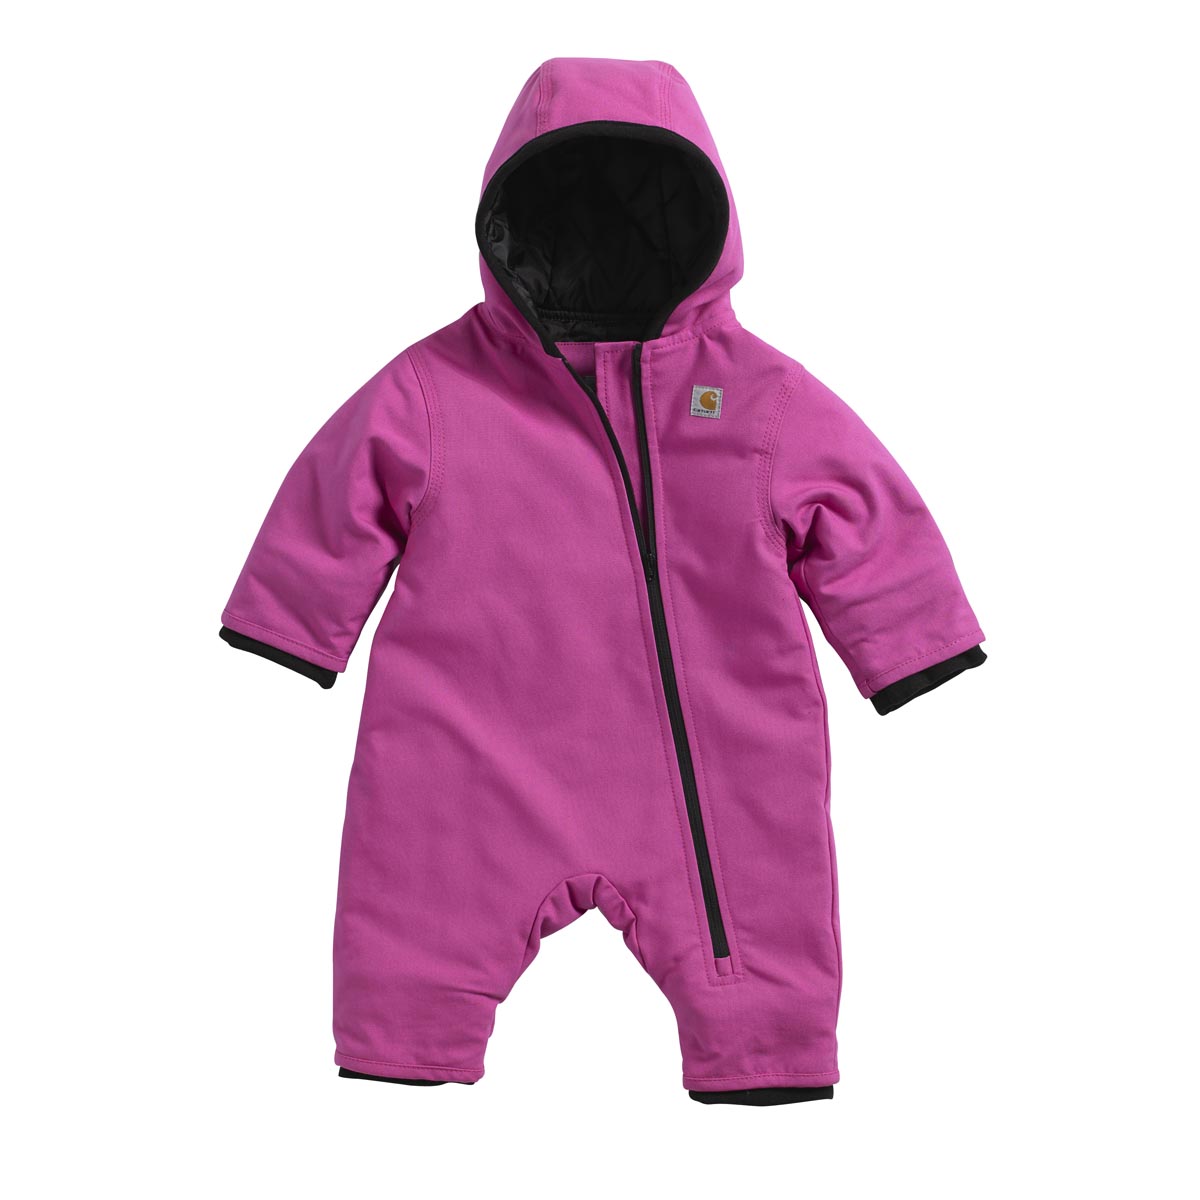 Carhartt Infant Girls' Quick Duck Snowsuit